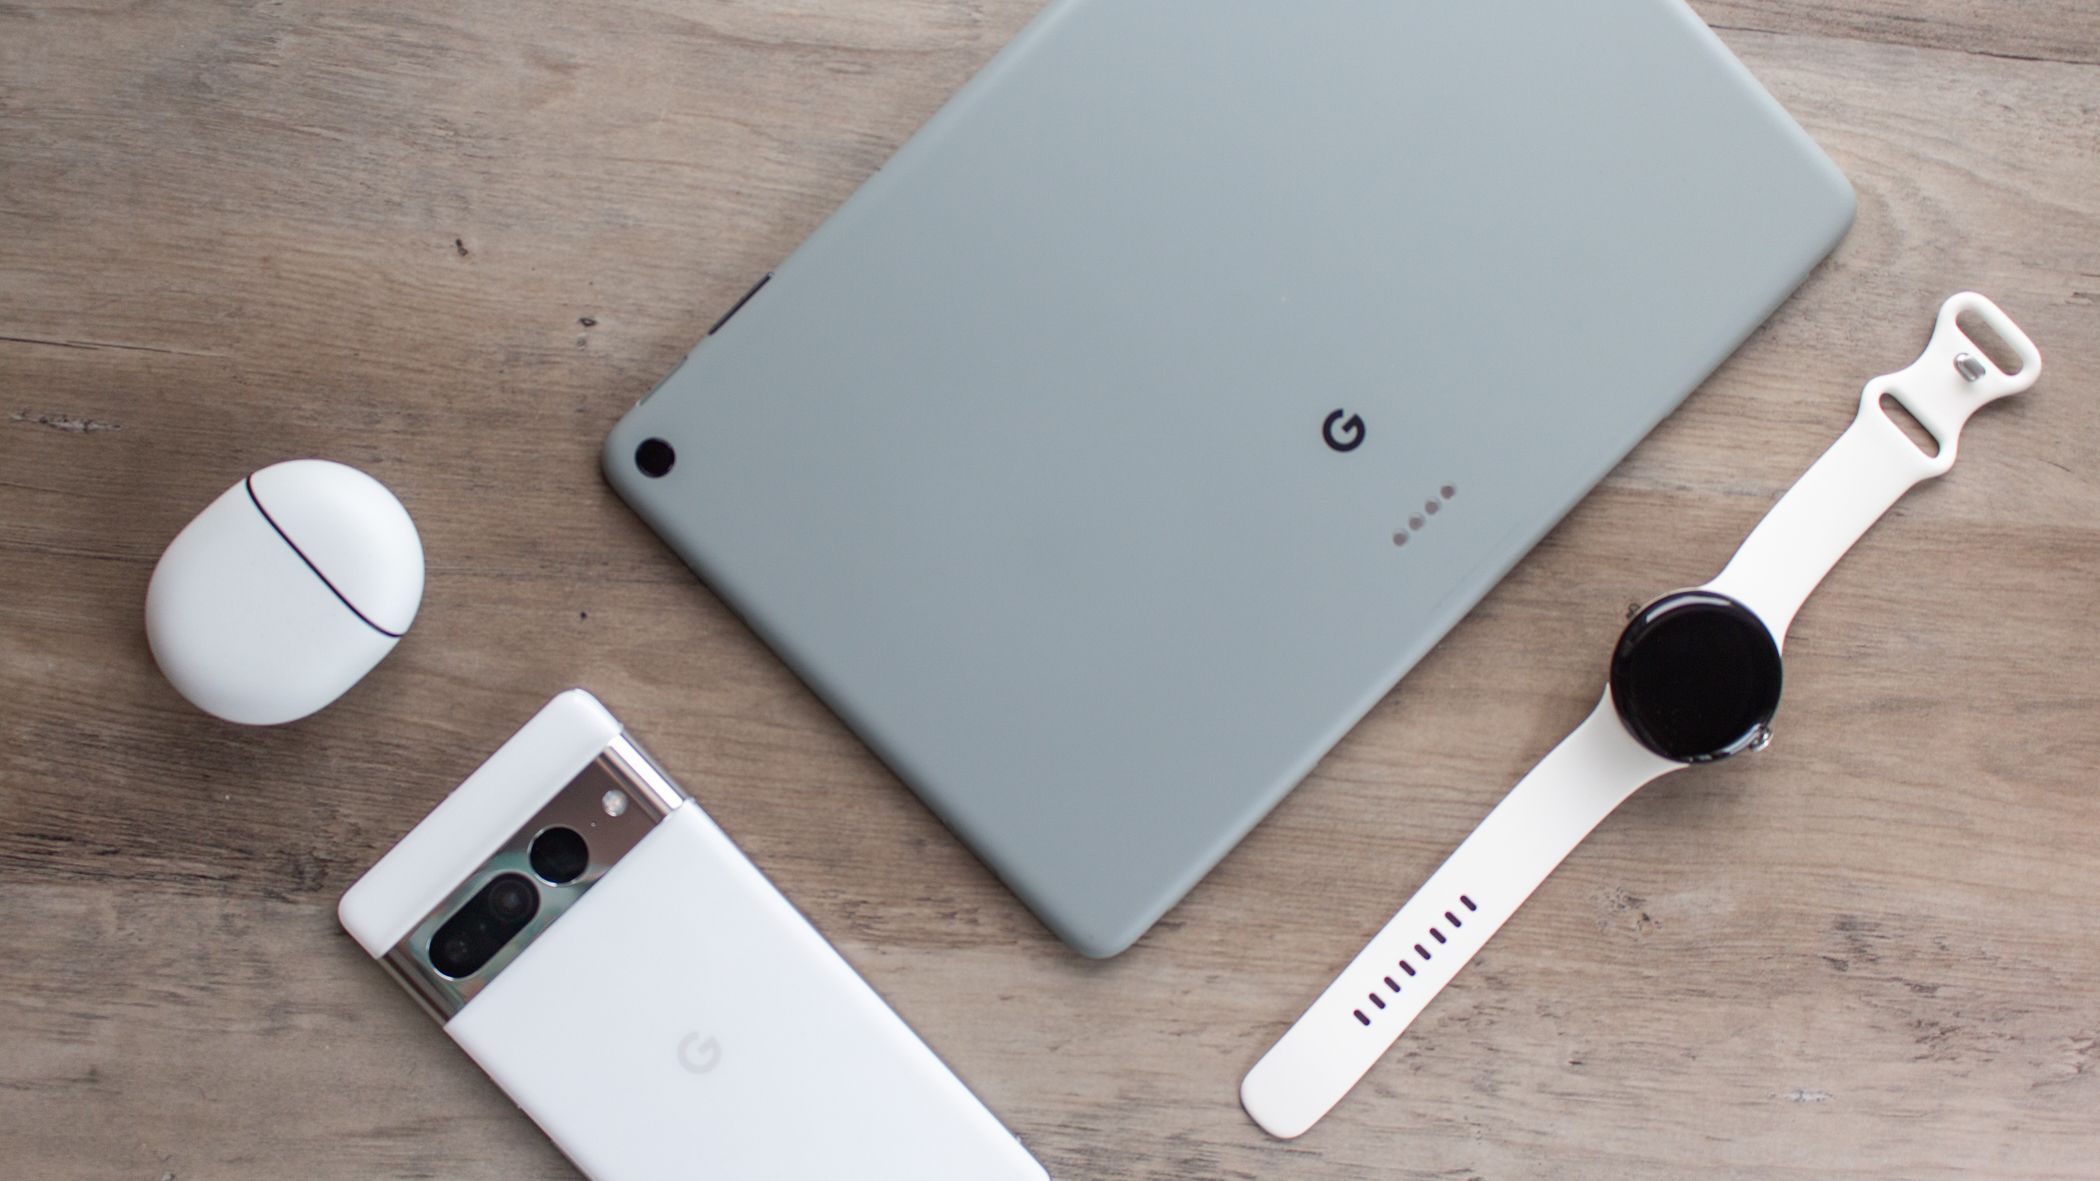 Google Pixel Tablet review: A versatile smart display | CNN Underscored